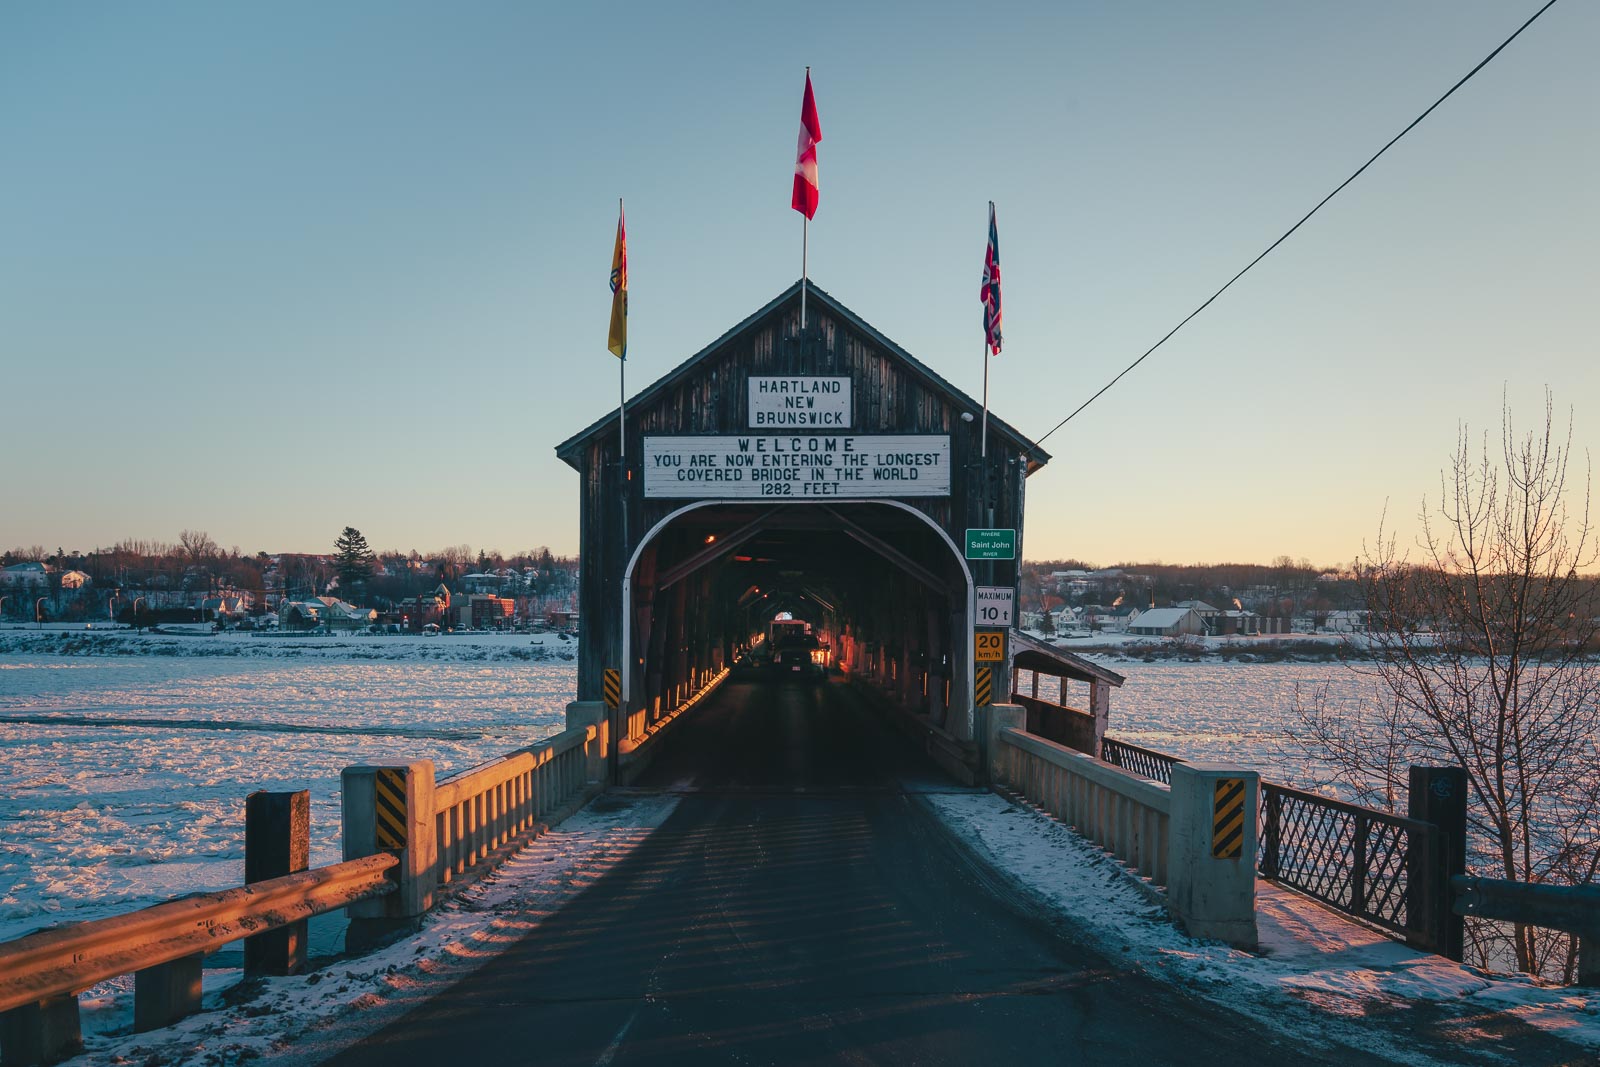 worlds longest covered bridge in New Brunswick